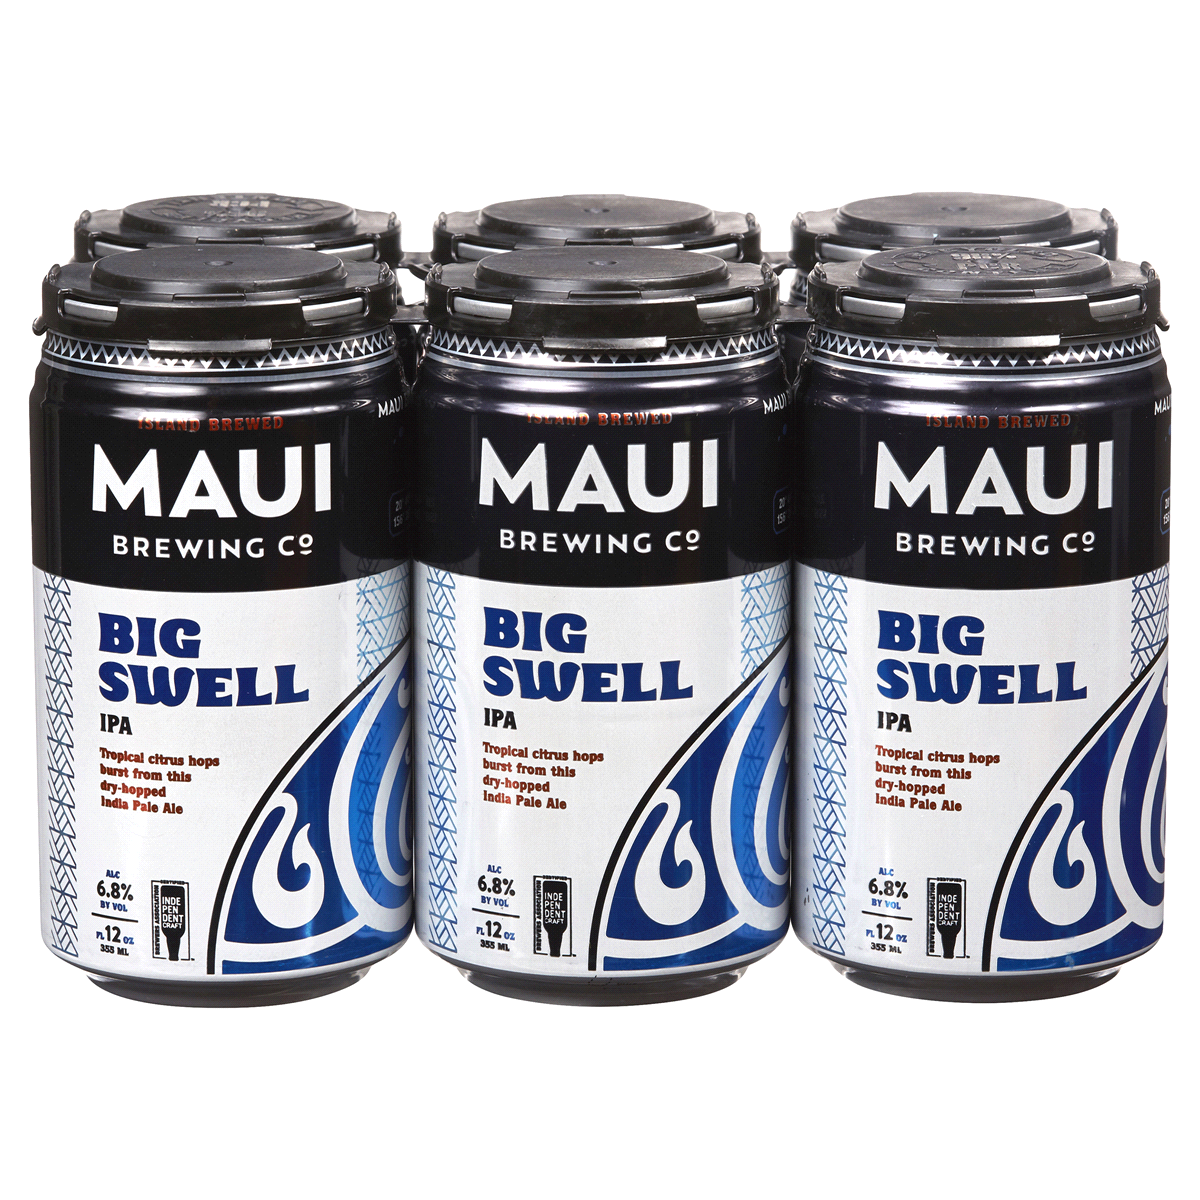 images/beer/IPA BEER/Maui Big Swell IPA.png